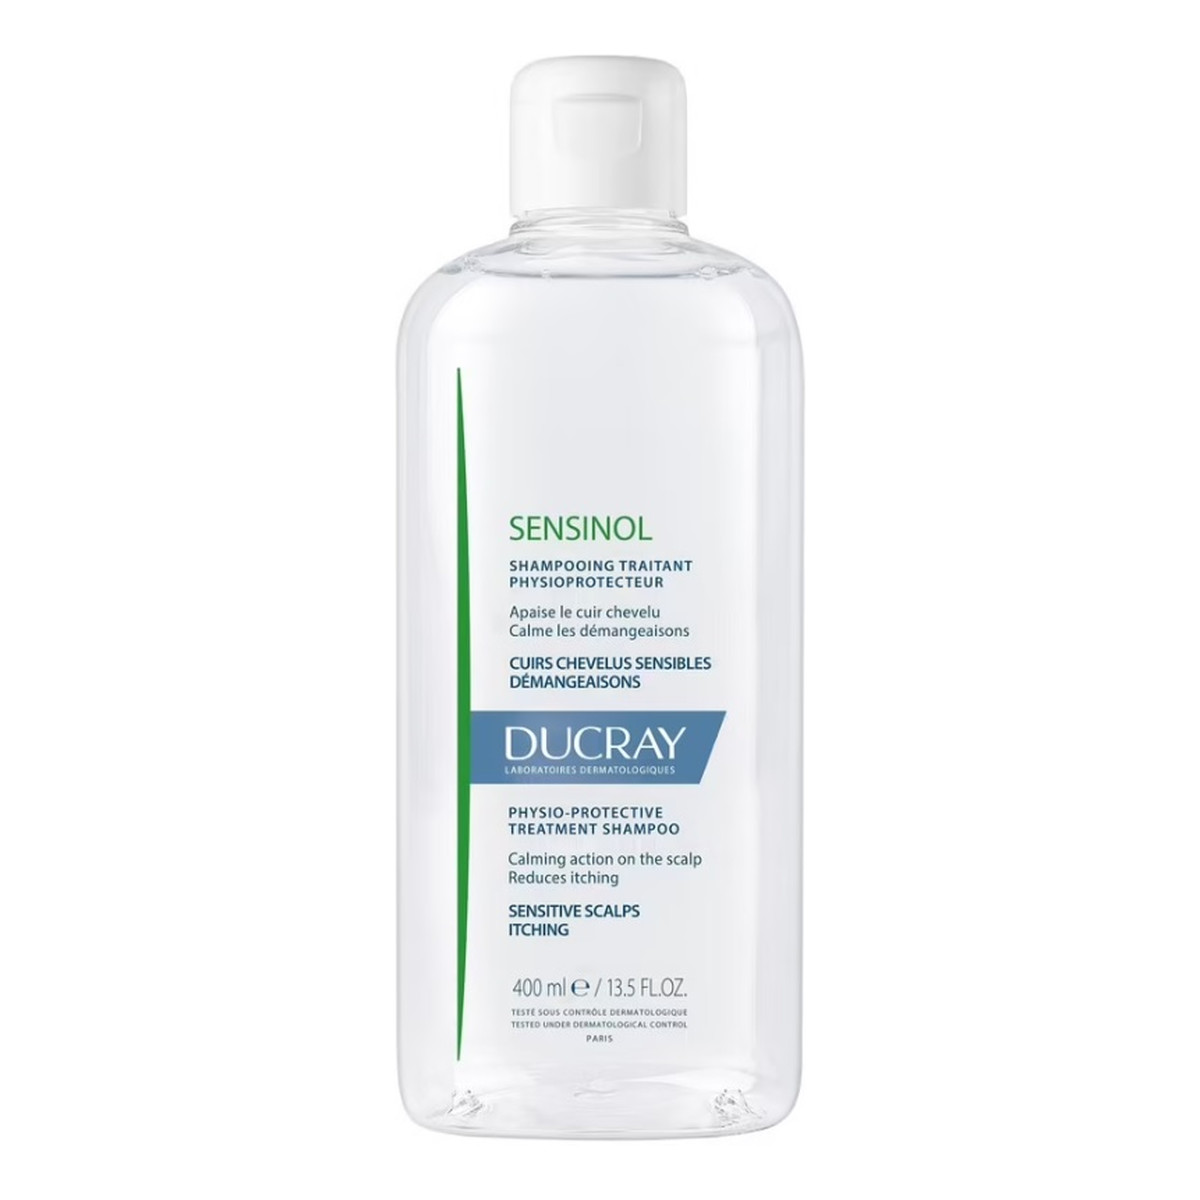 Ducray Sensinol physio-protective treatment shampoo szampon fizjoochronny do włosów 400ml